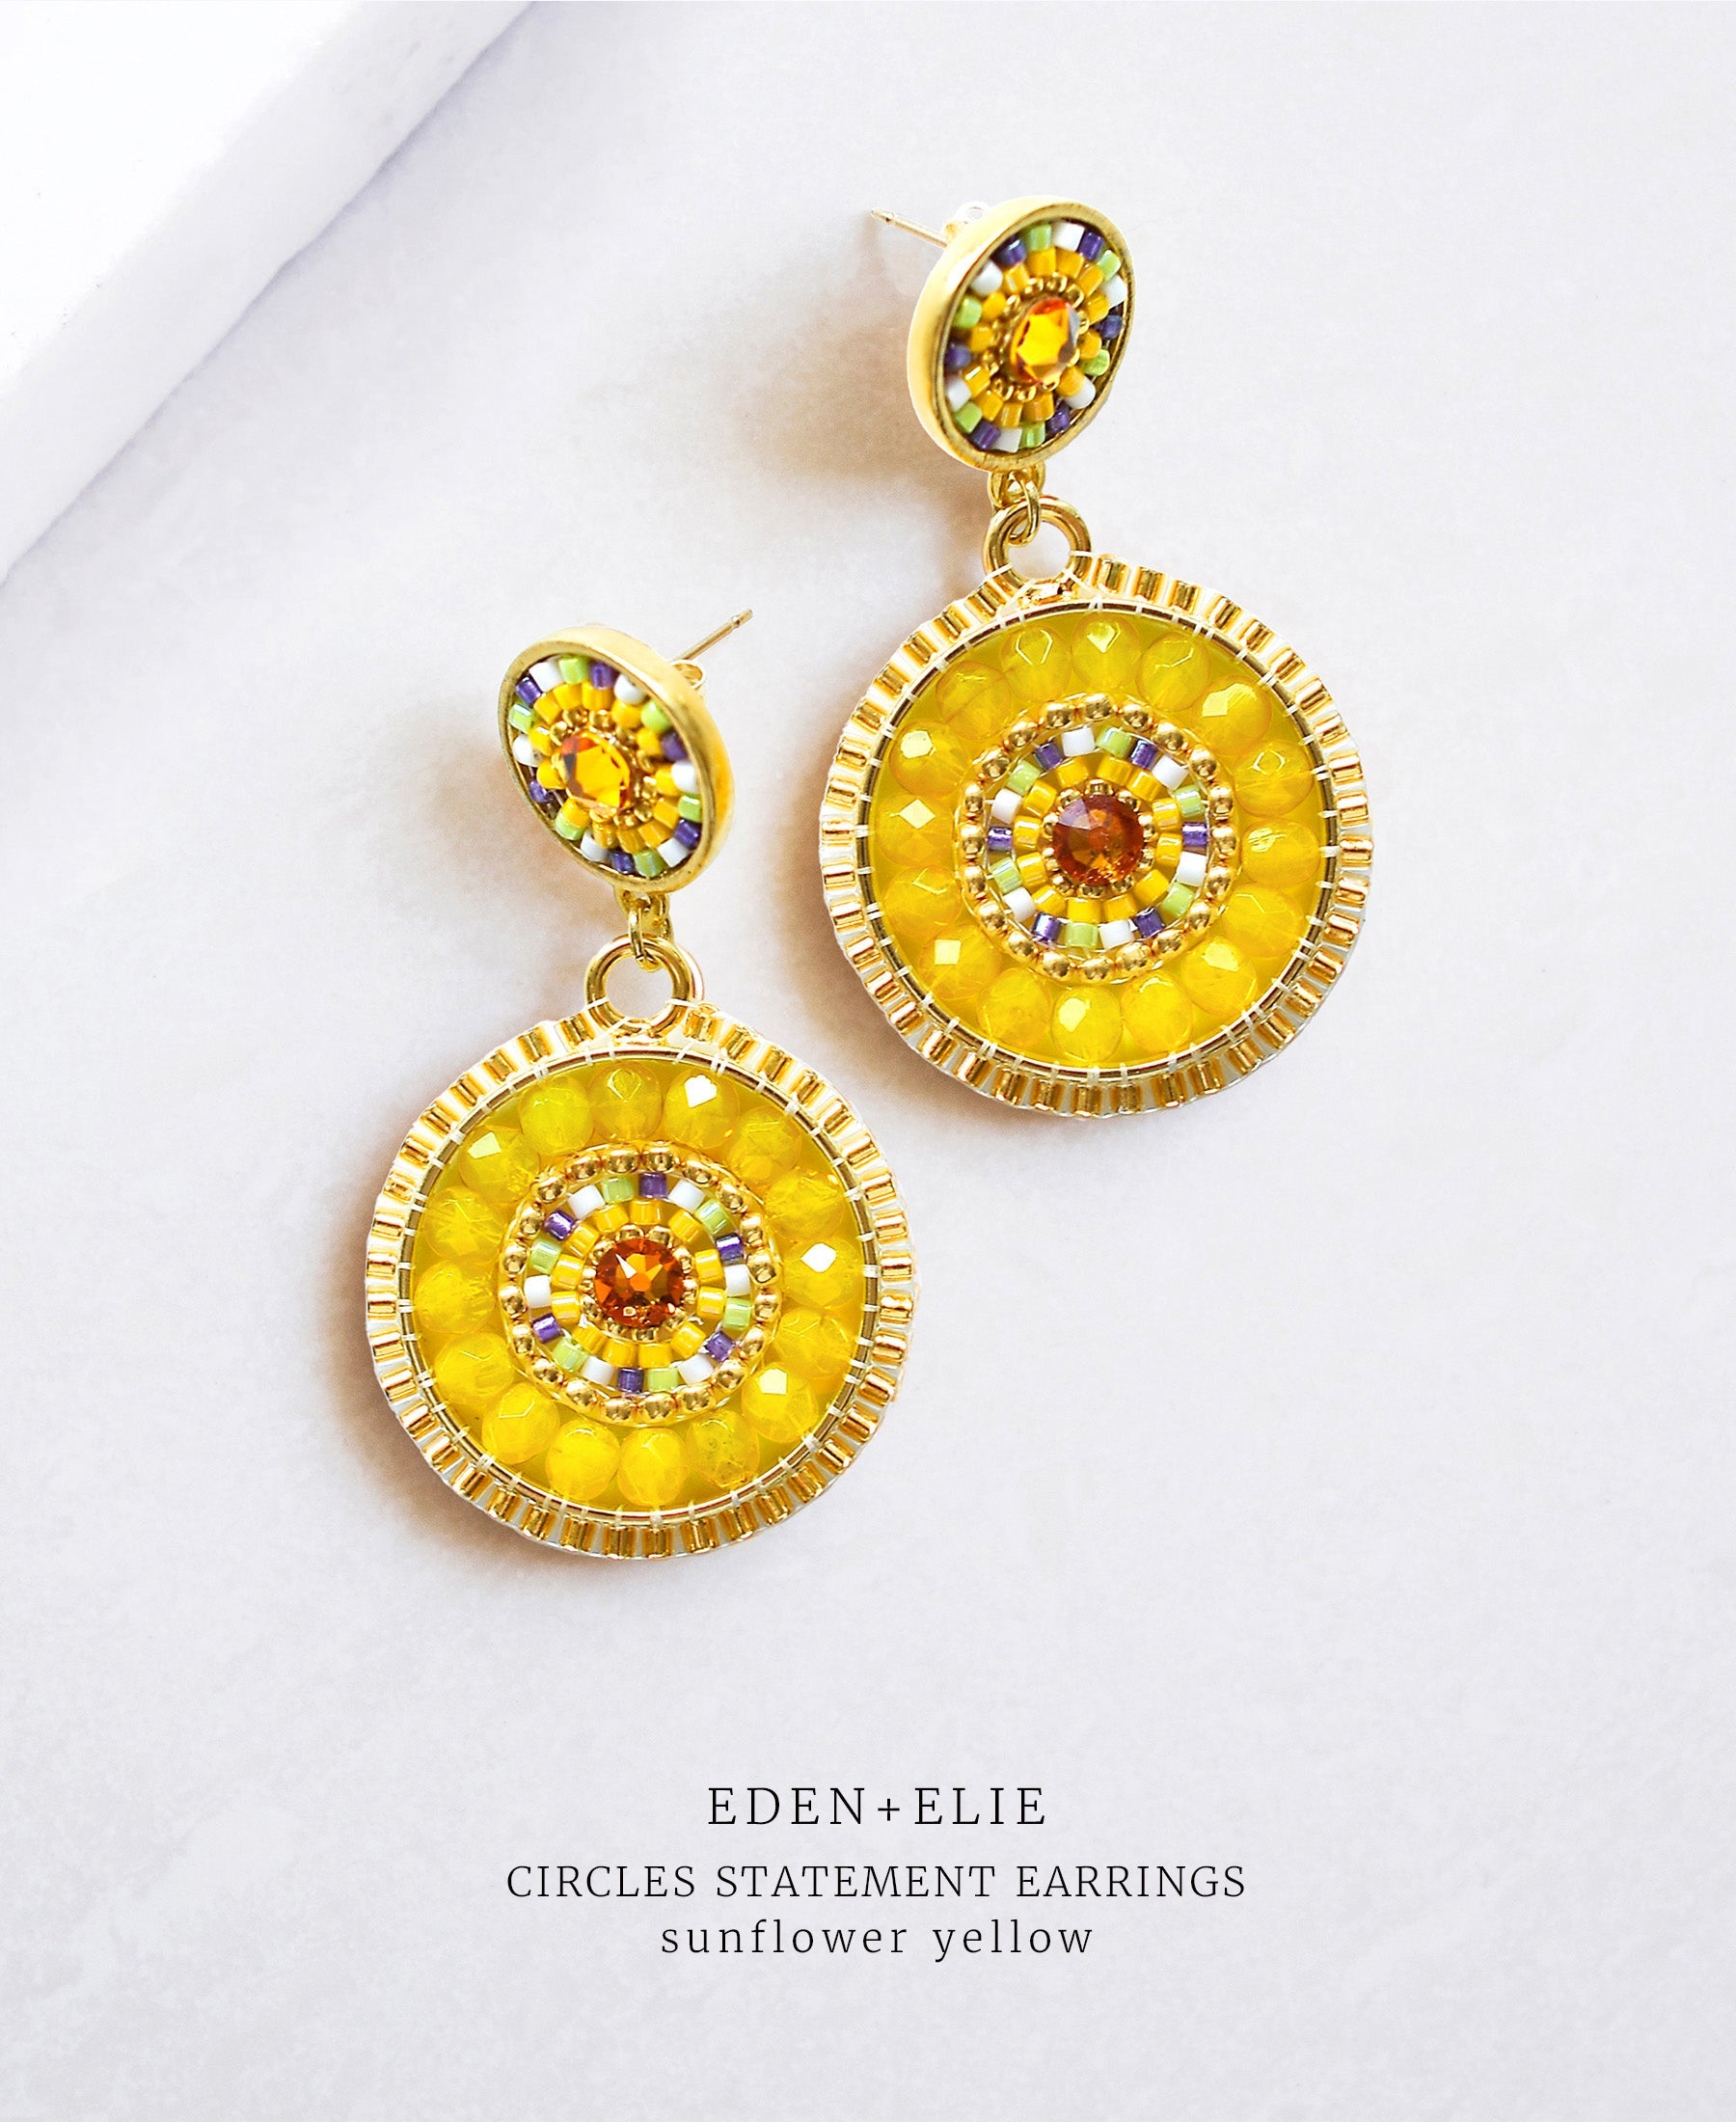 EDEN + ELIE double circle statement drop earrings - sunflower yellow